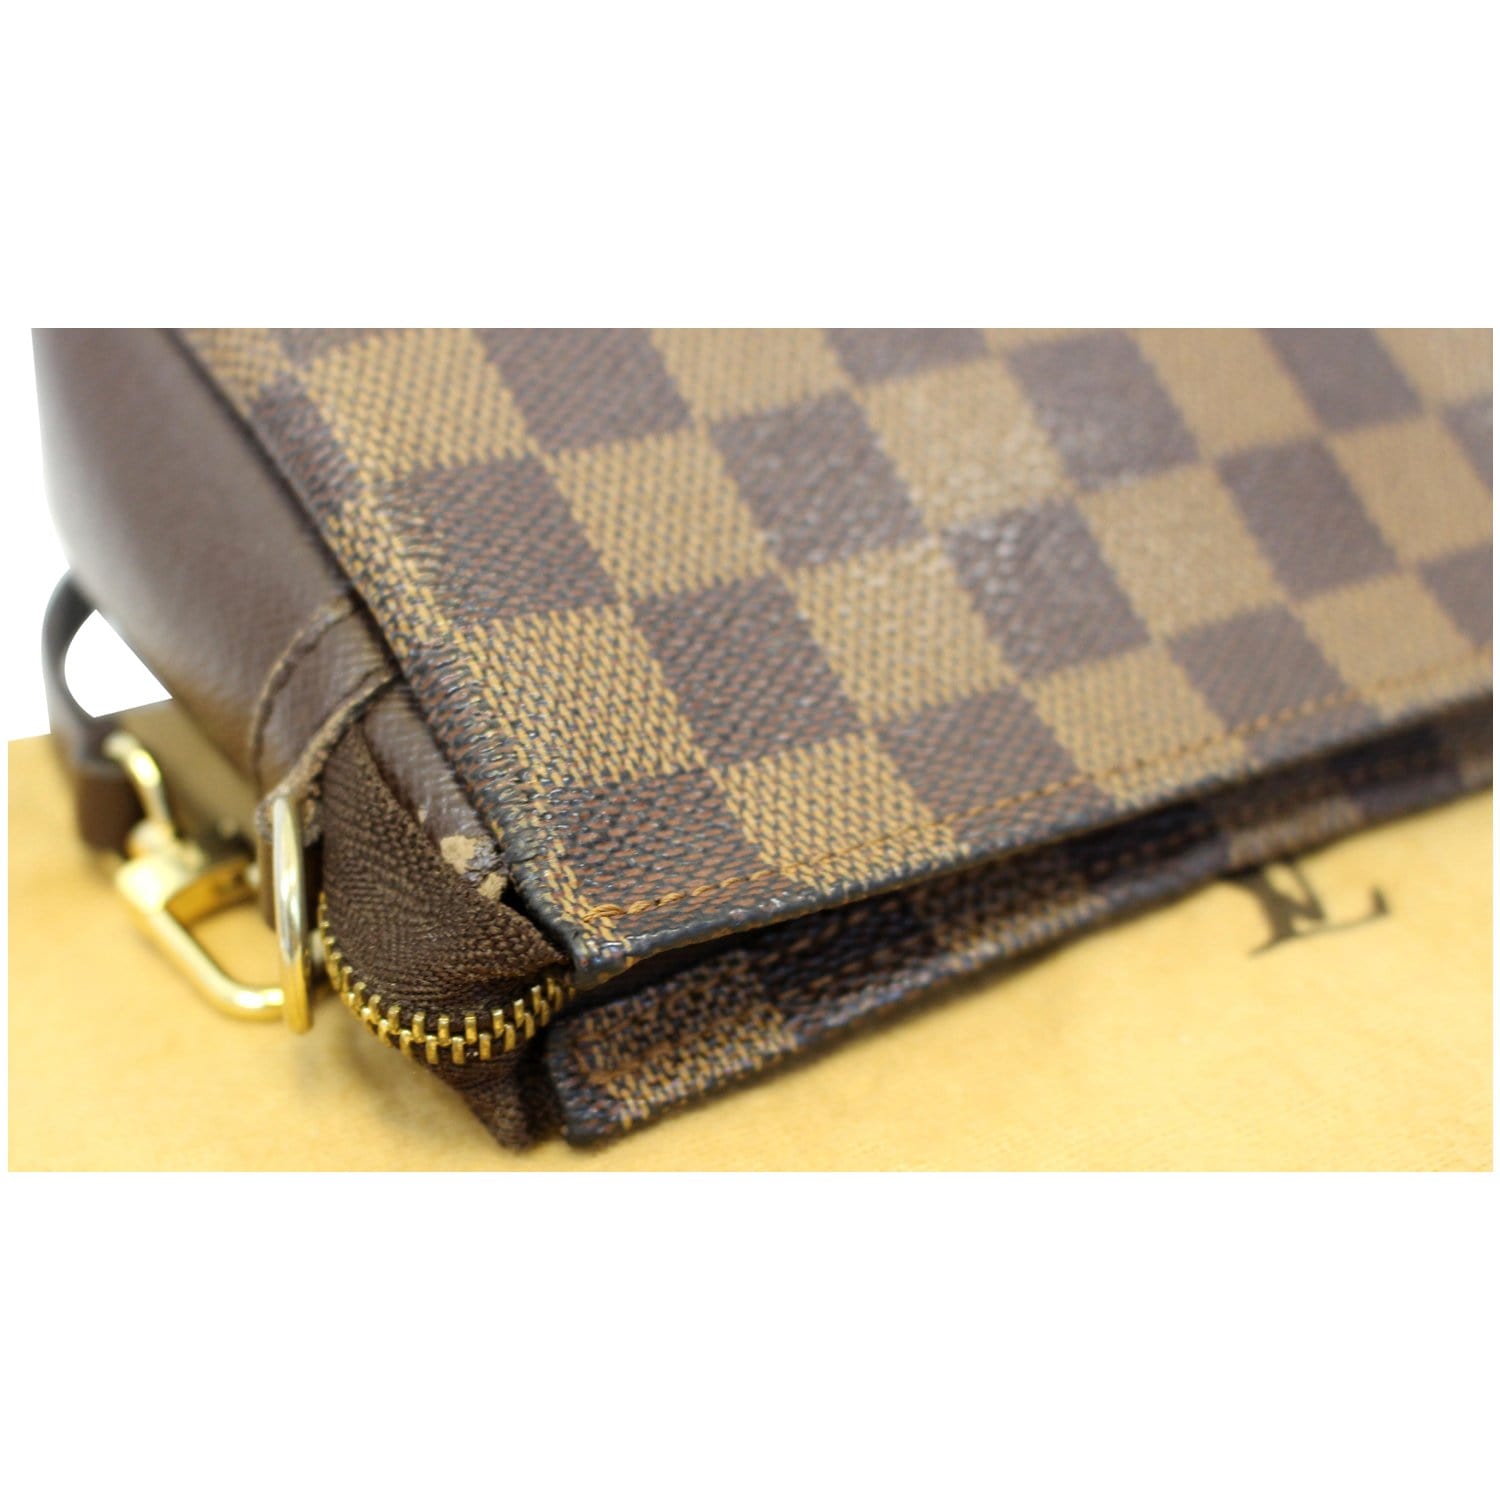 Louis Vuitton makeup bag in ebene checkered coated canvas, En très